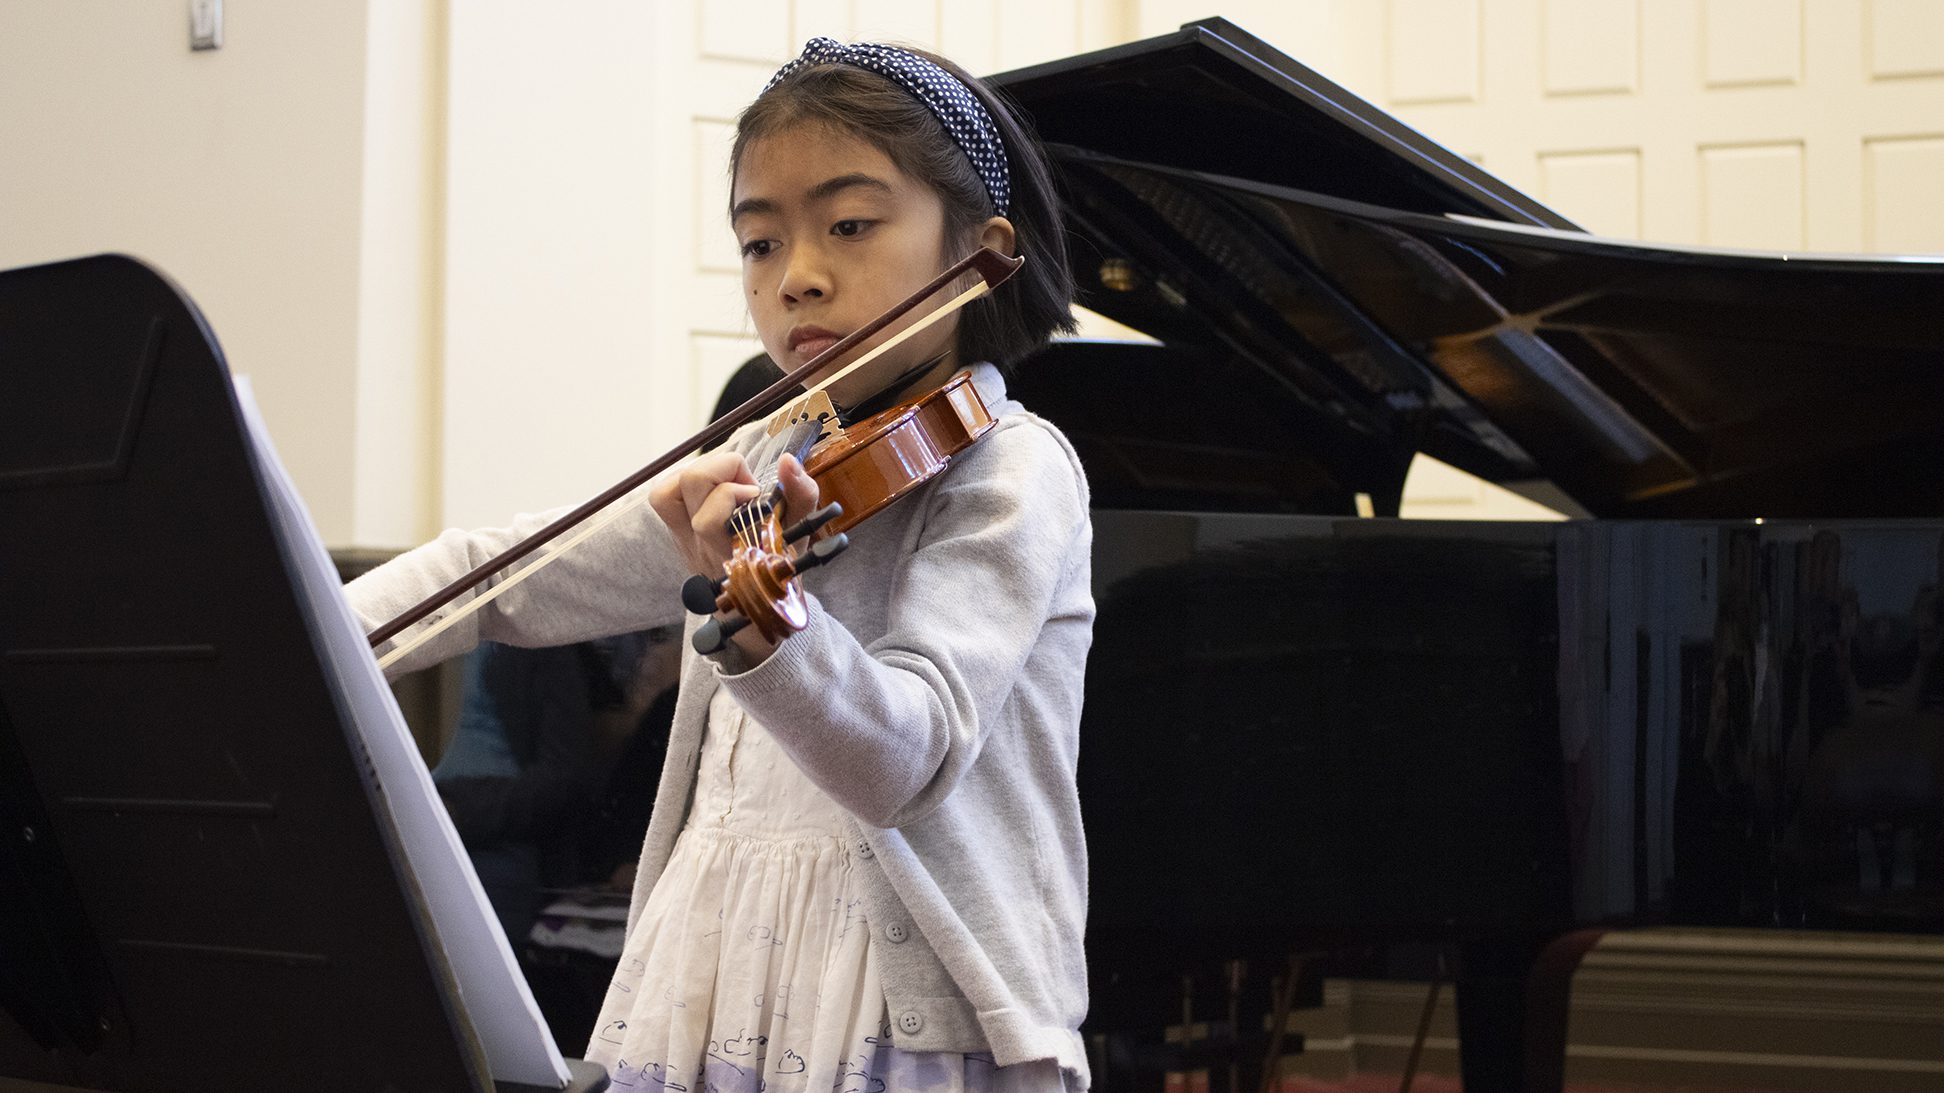 Manitoba Conservatory of Arts student playing violin